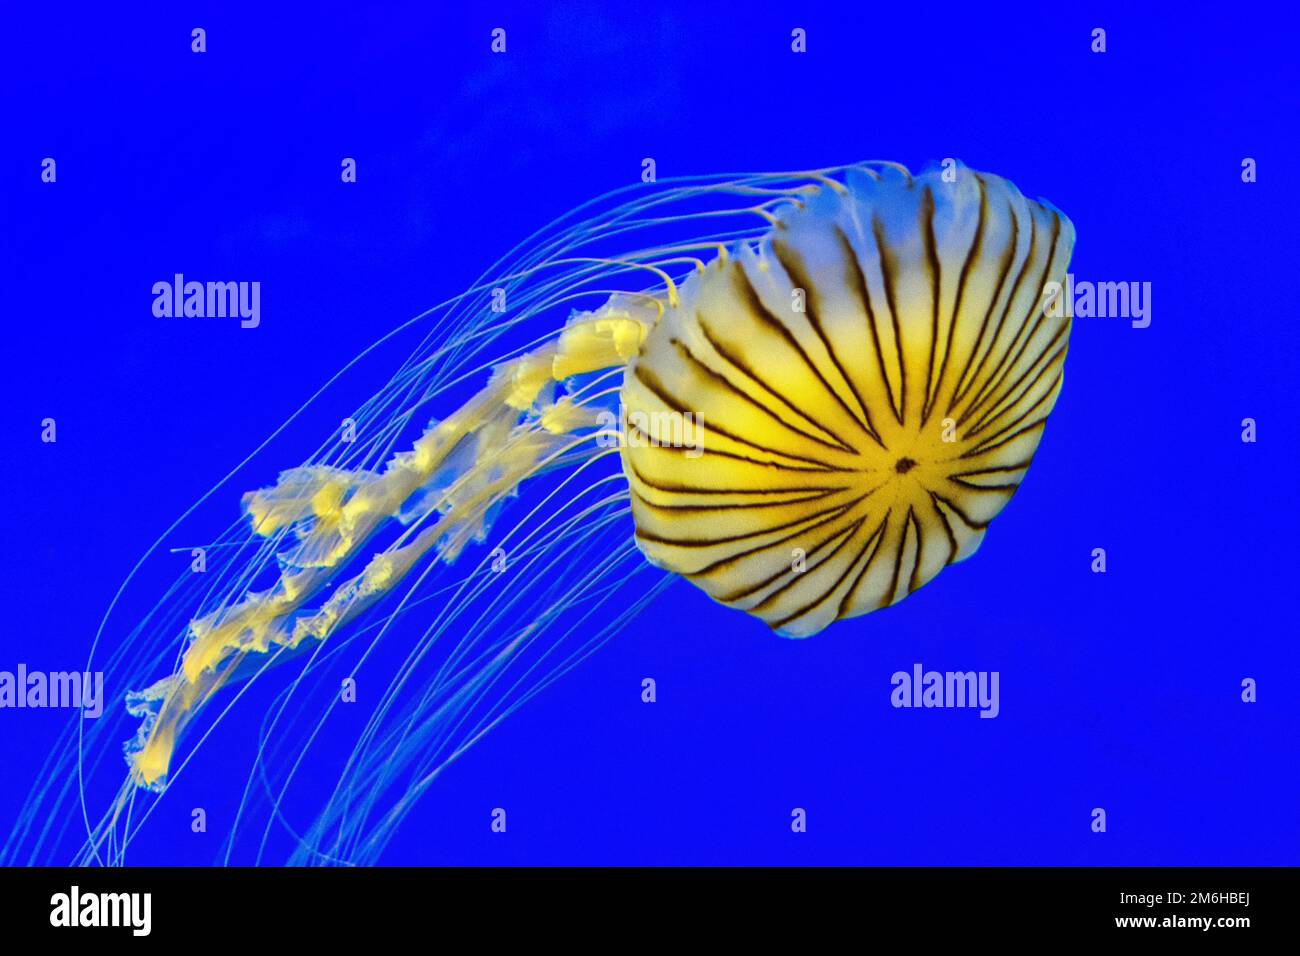 Méduse jaune (Chrysaora hysoscella) avec des bandes brunes, nageant dans l'aquarium, bleu, illuminé Banque D'Images